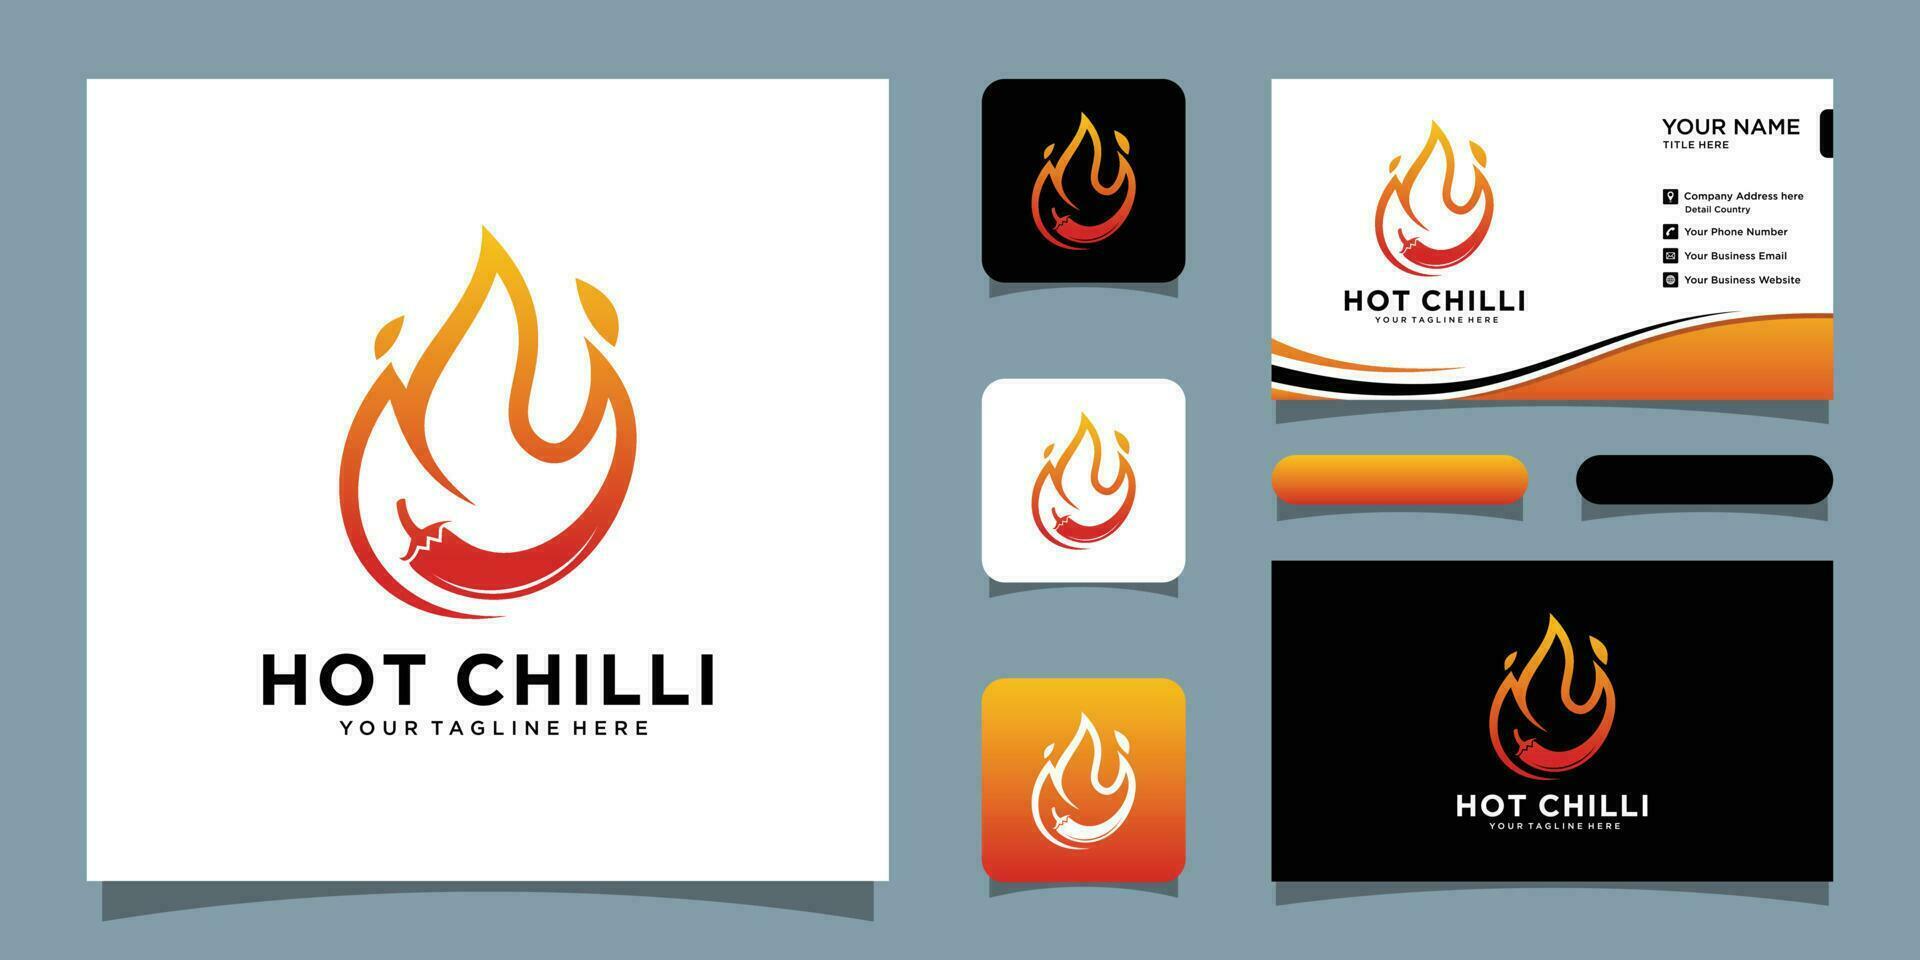 Red hot chili logo designs concept vector spicy pepper logo designs template Premium Vector